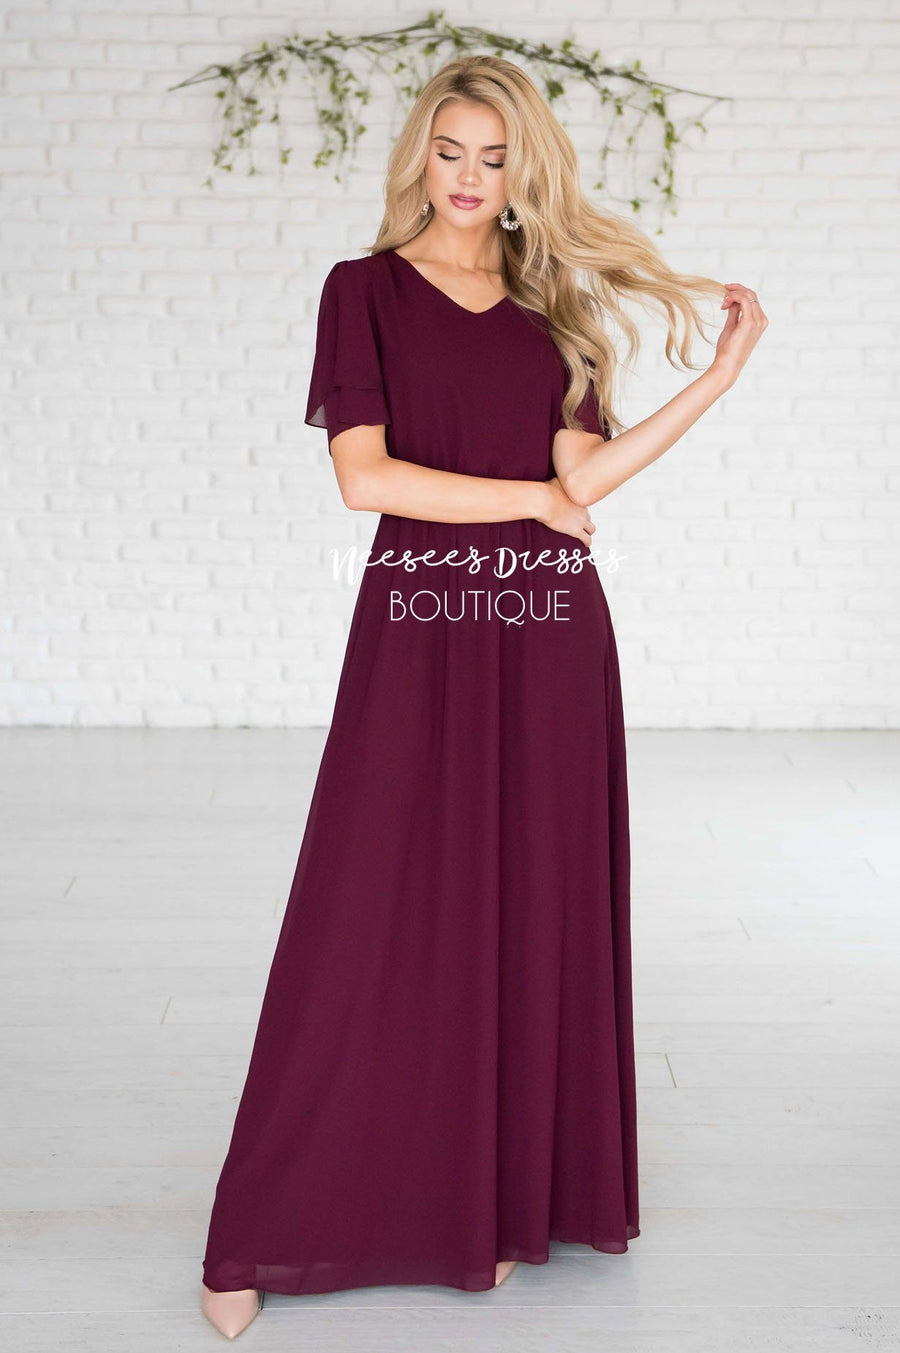 modest bridesmaid dresses burgundy